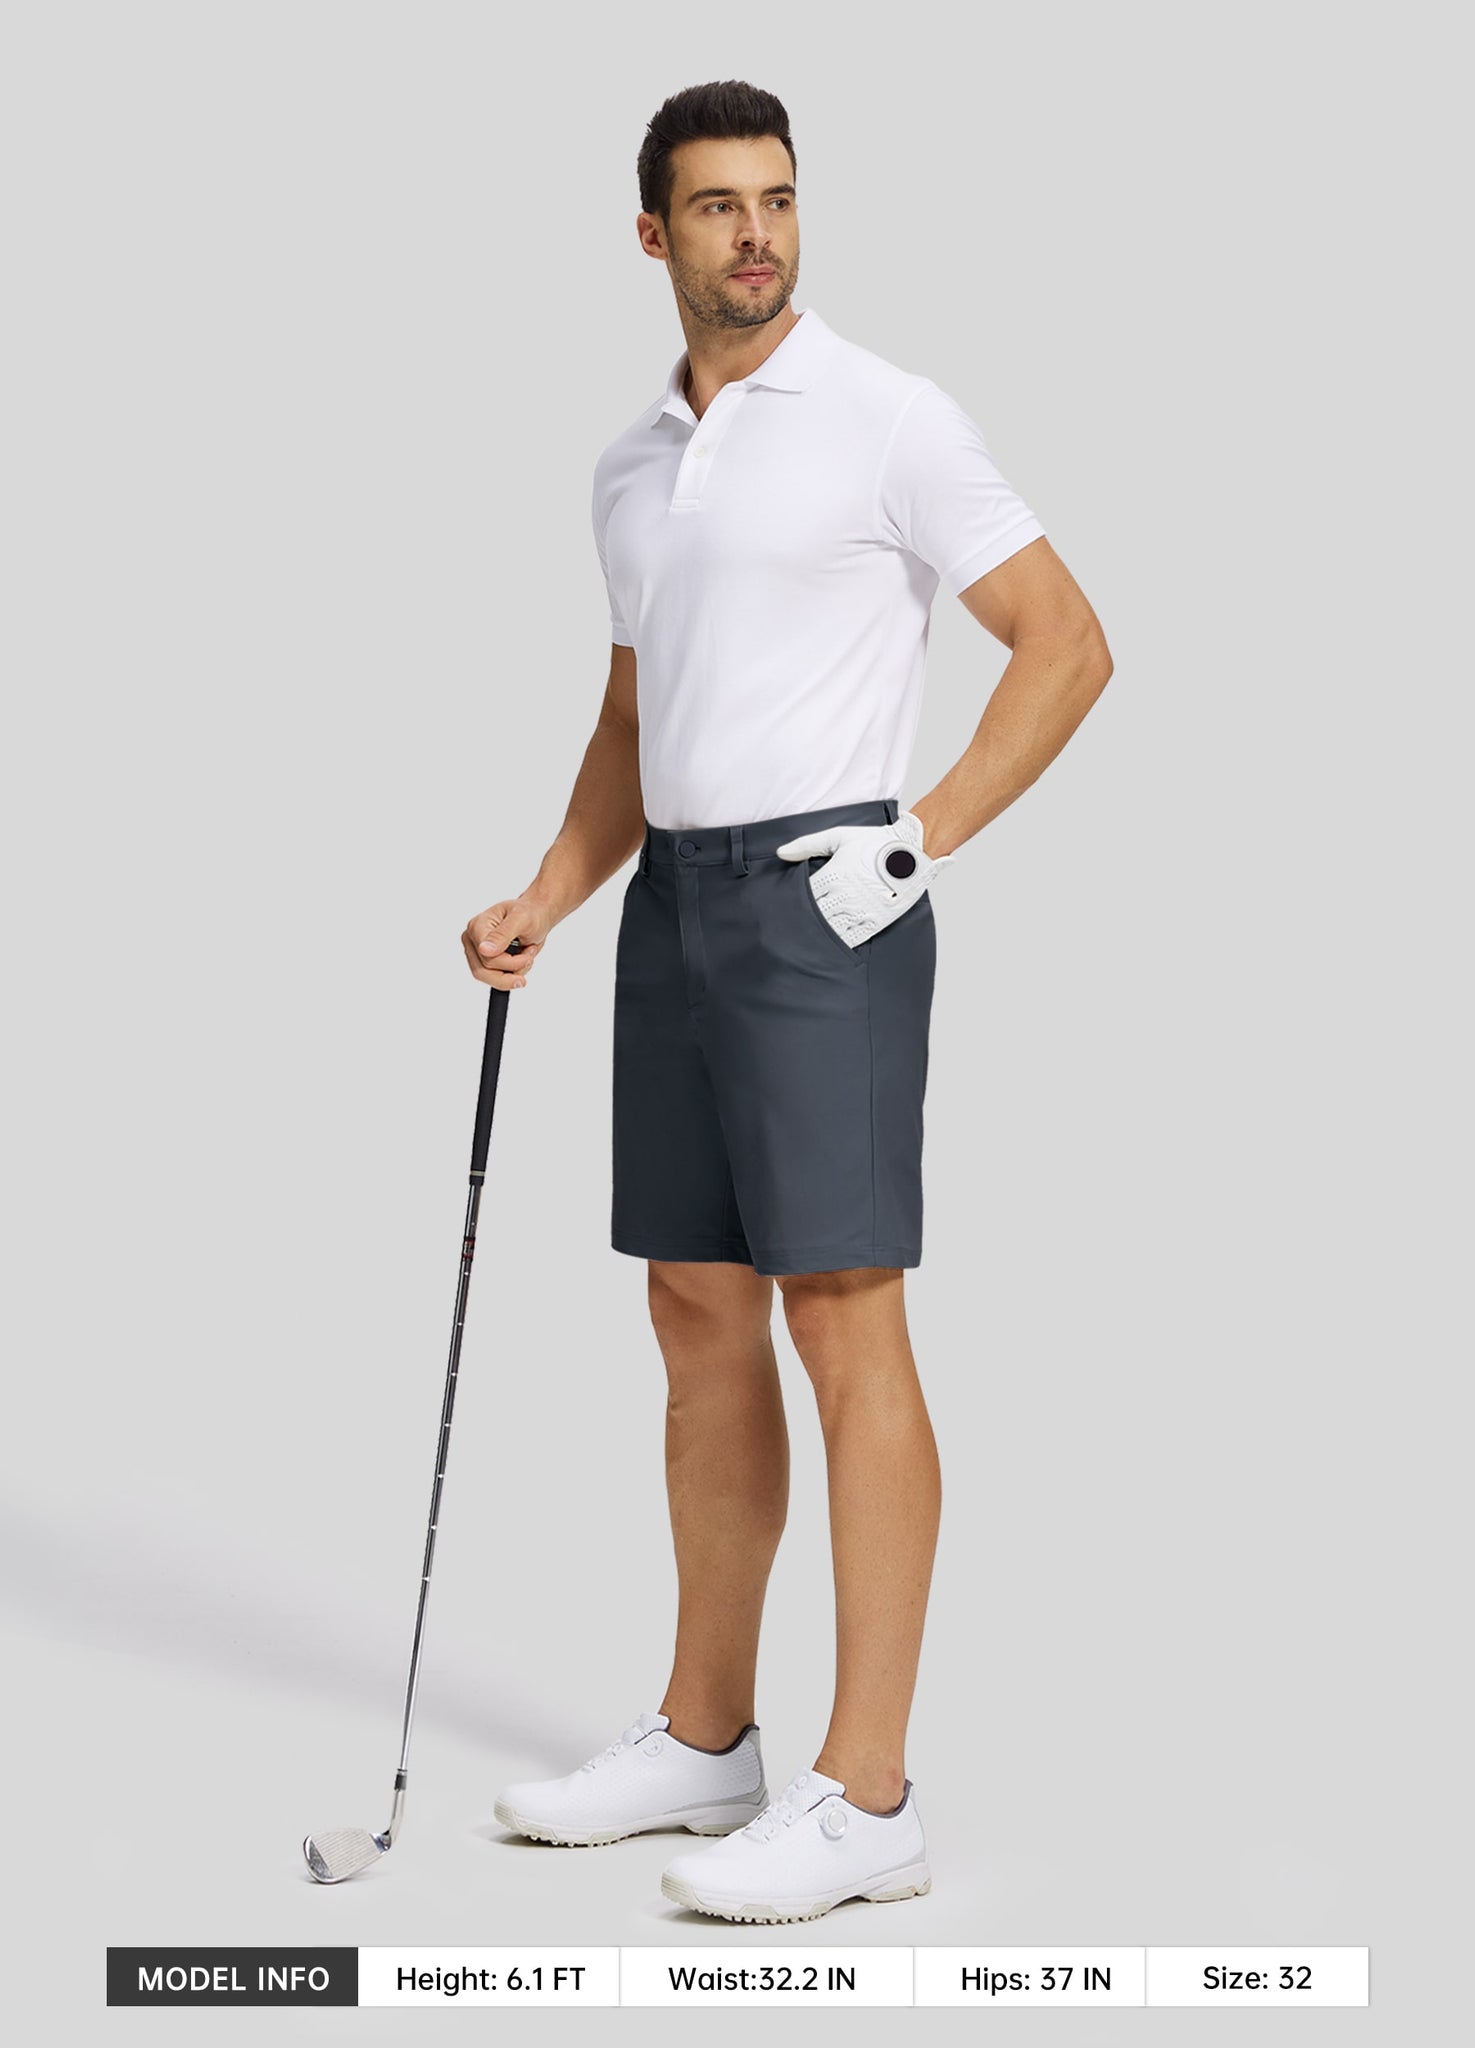 Men's Casual Golf Shorts 9 Inch